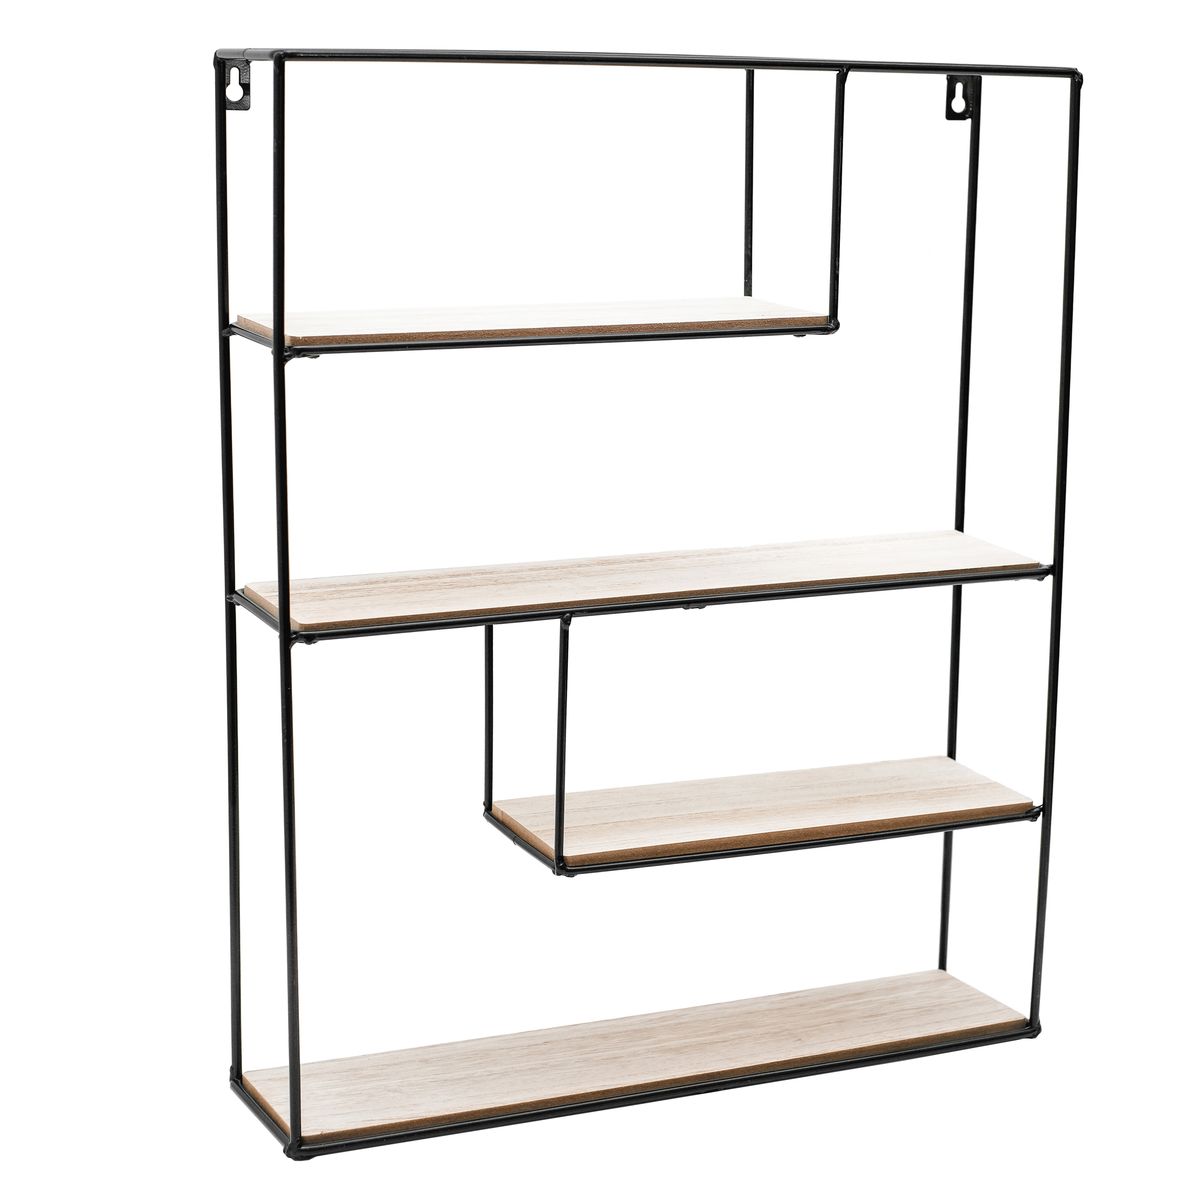 HouzeComfort Rectangular Decorative Wall Shelves & Display Shelf